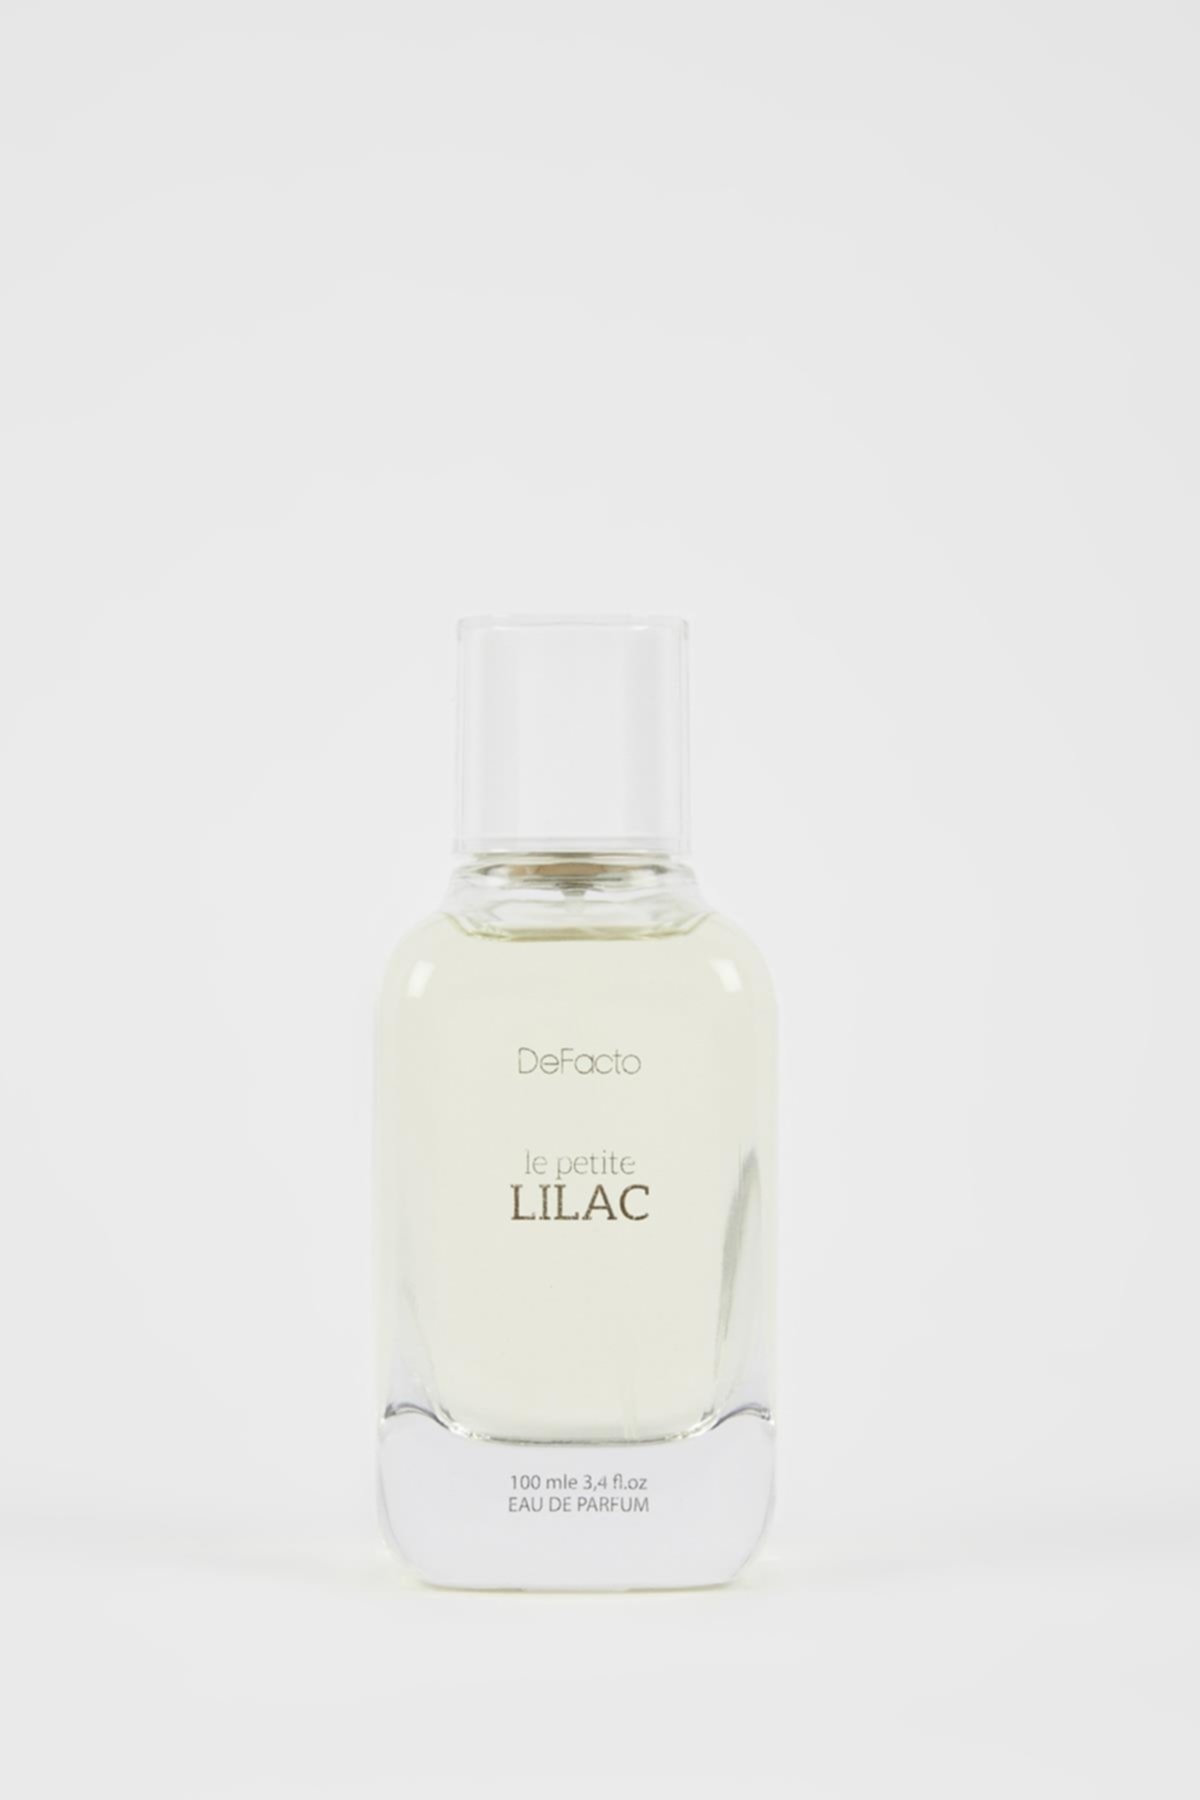 عطر زنانه لیلاک 100 میل دیفکتو Defacto Lilac